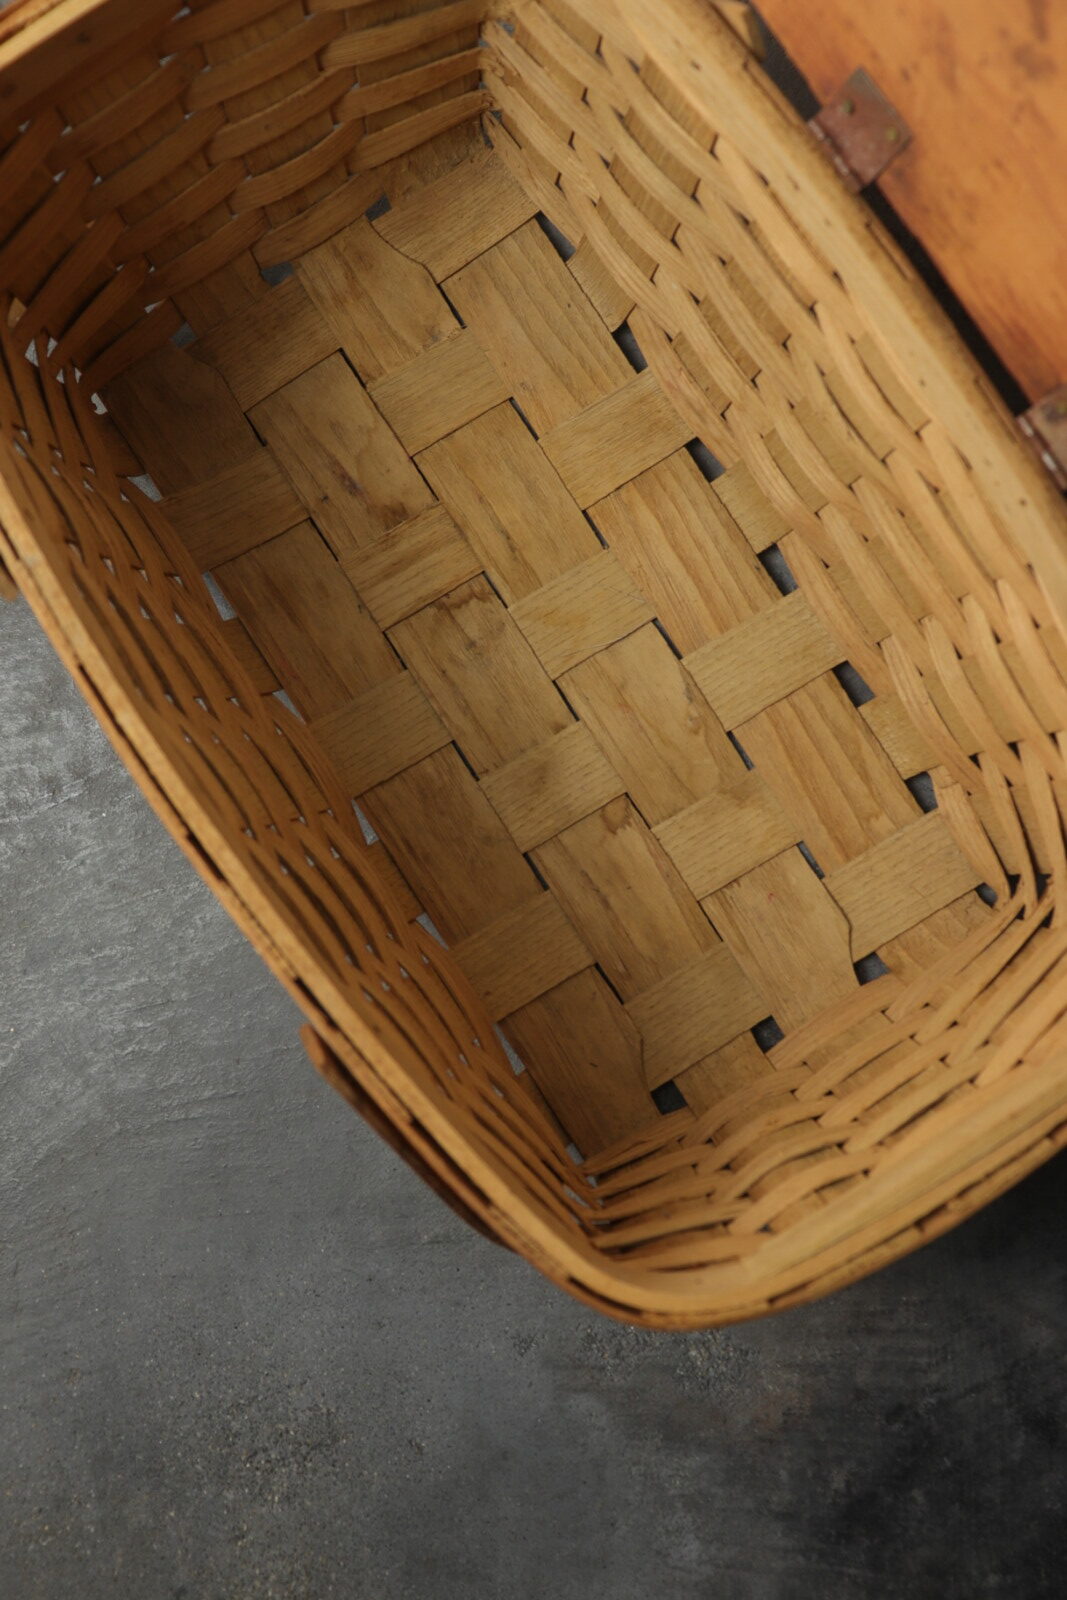 vintage,picnic basket,splint basket,PETERBORO,USA